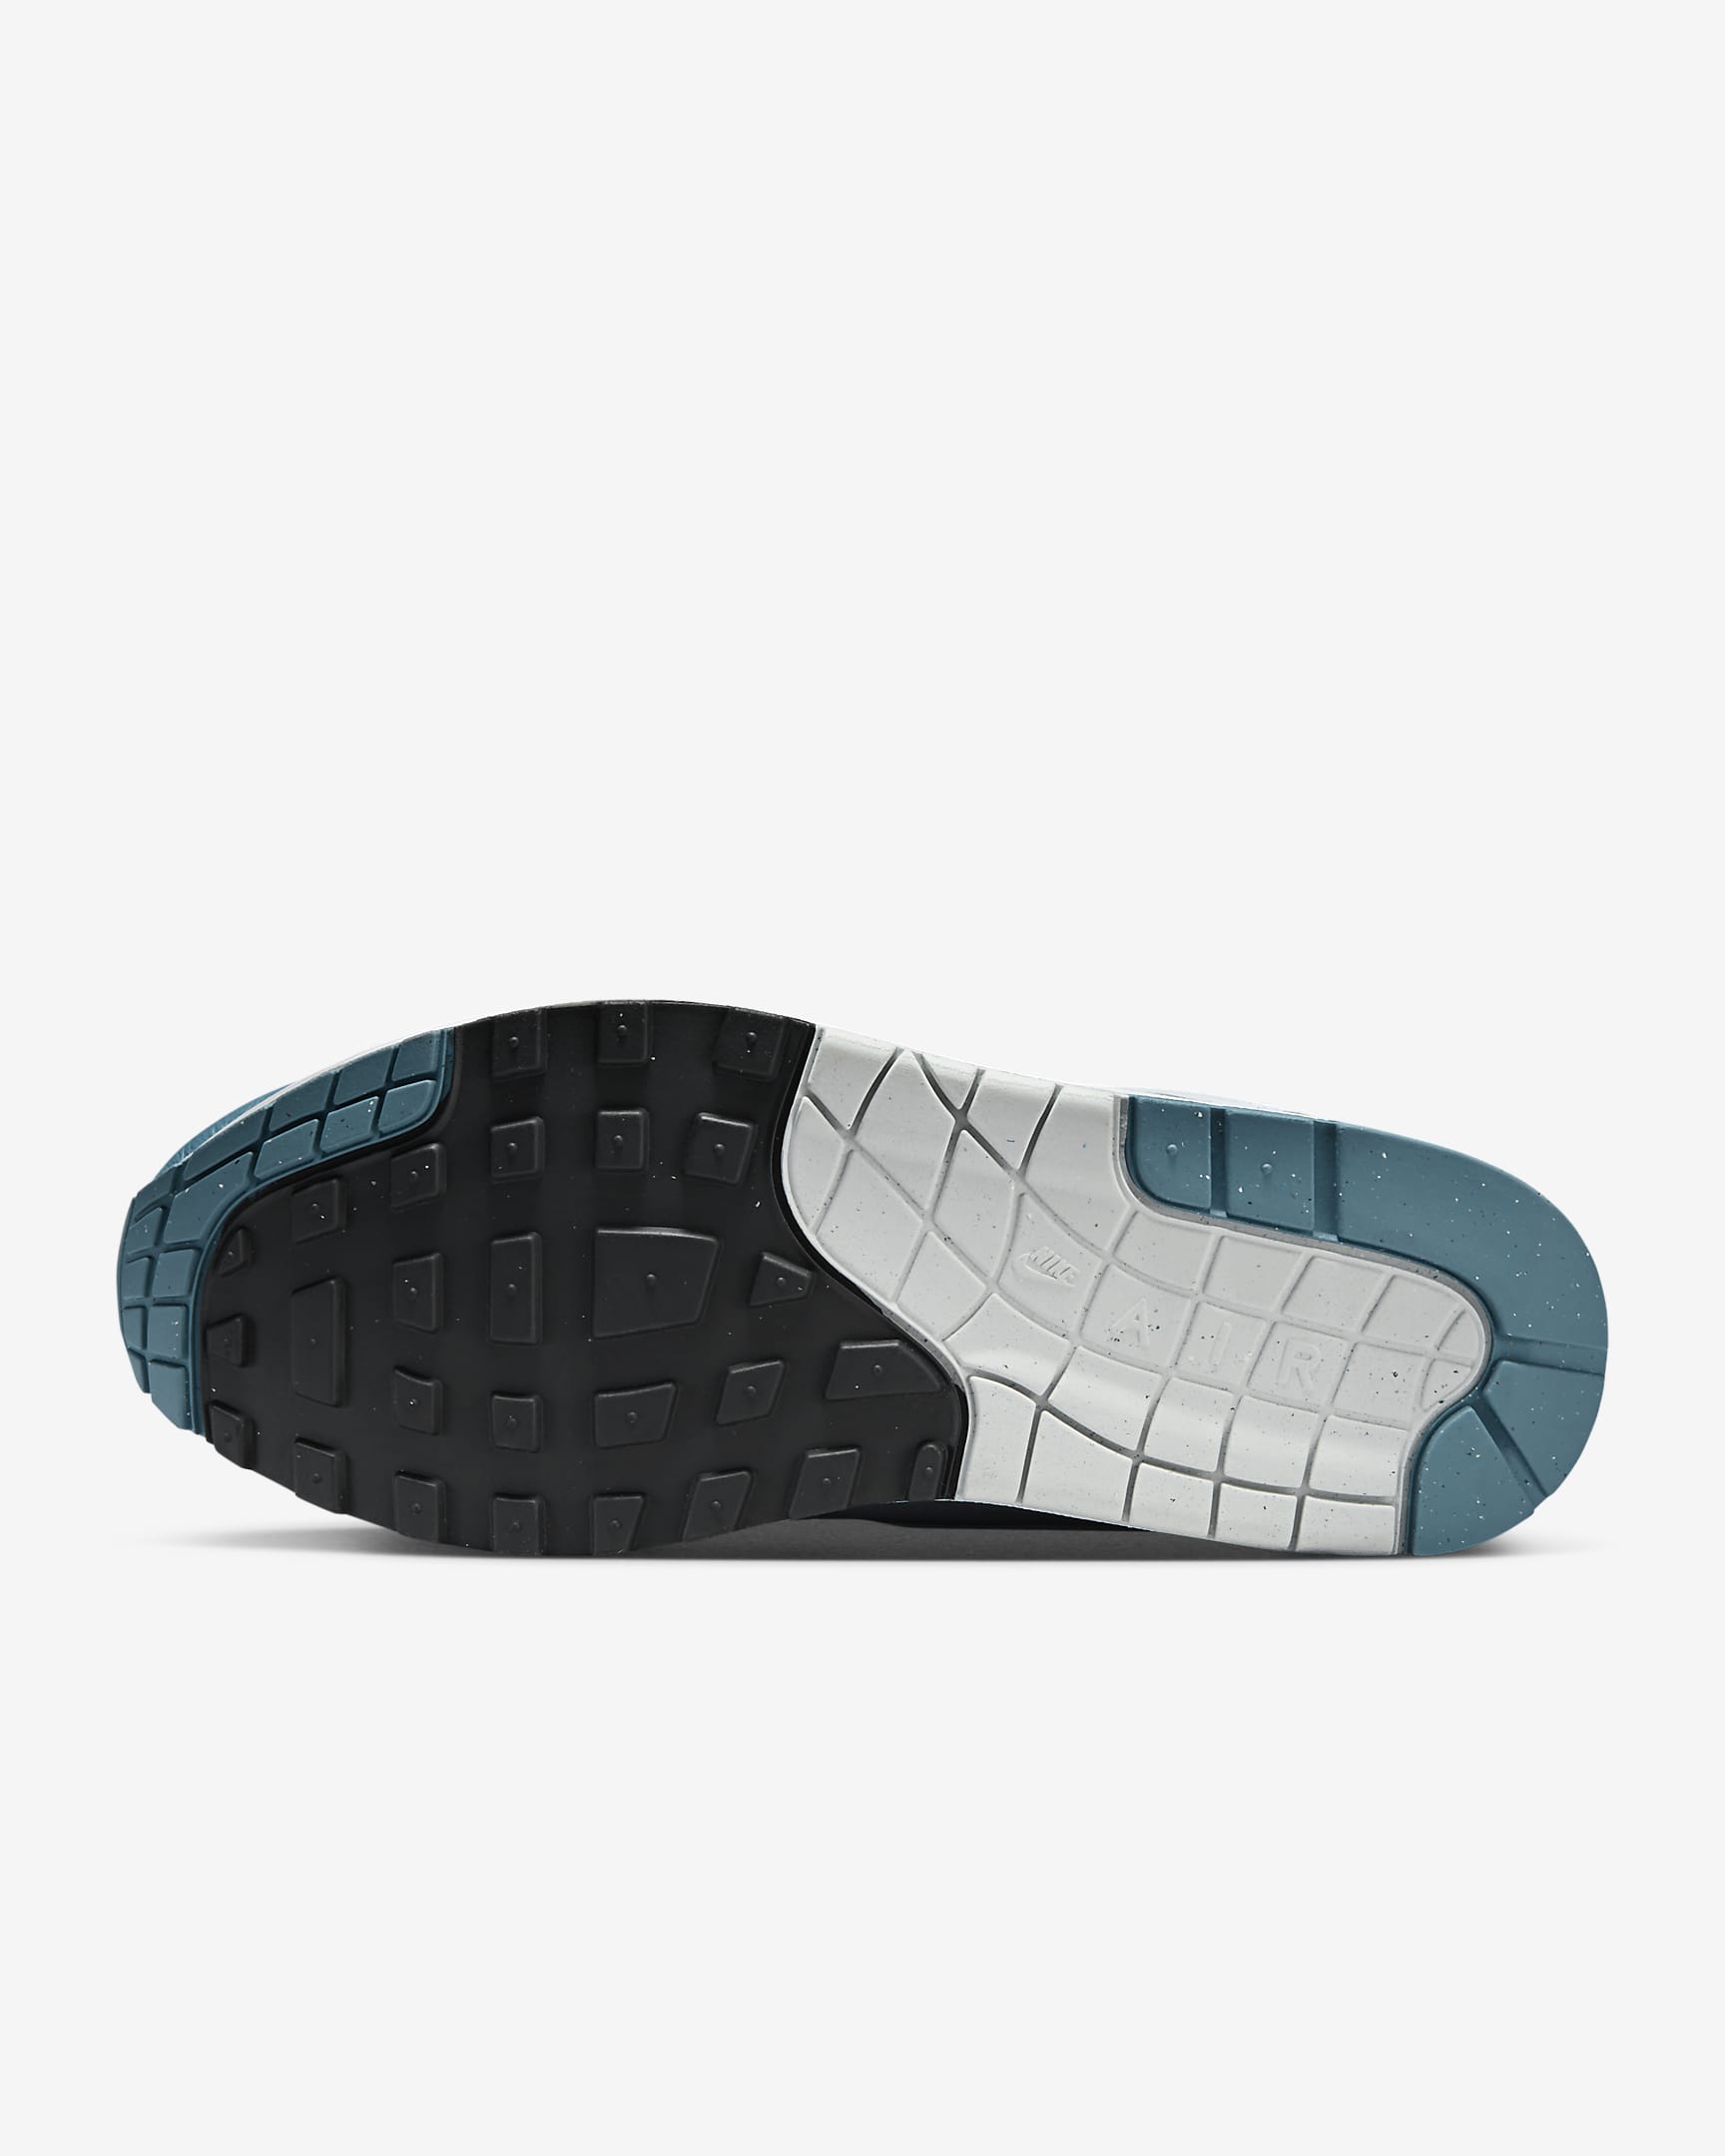 Nike Air Max 1 SC Men's Shoes - Photon Dust/Cool Grey/Noise Aqua/White